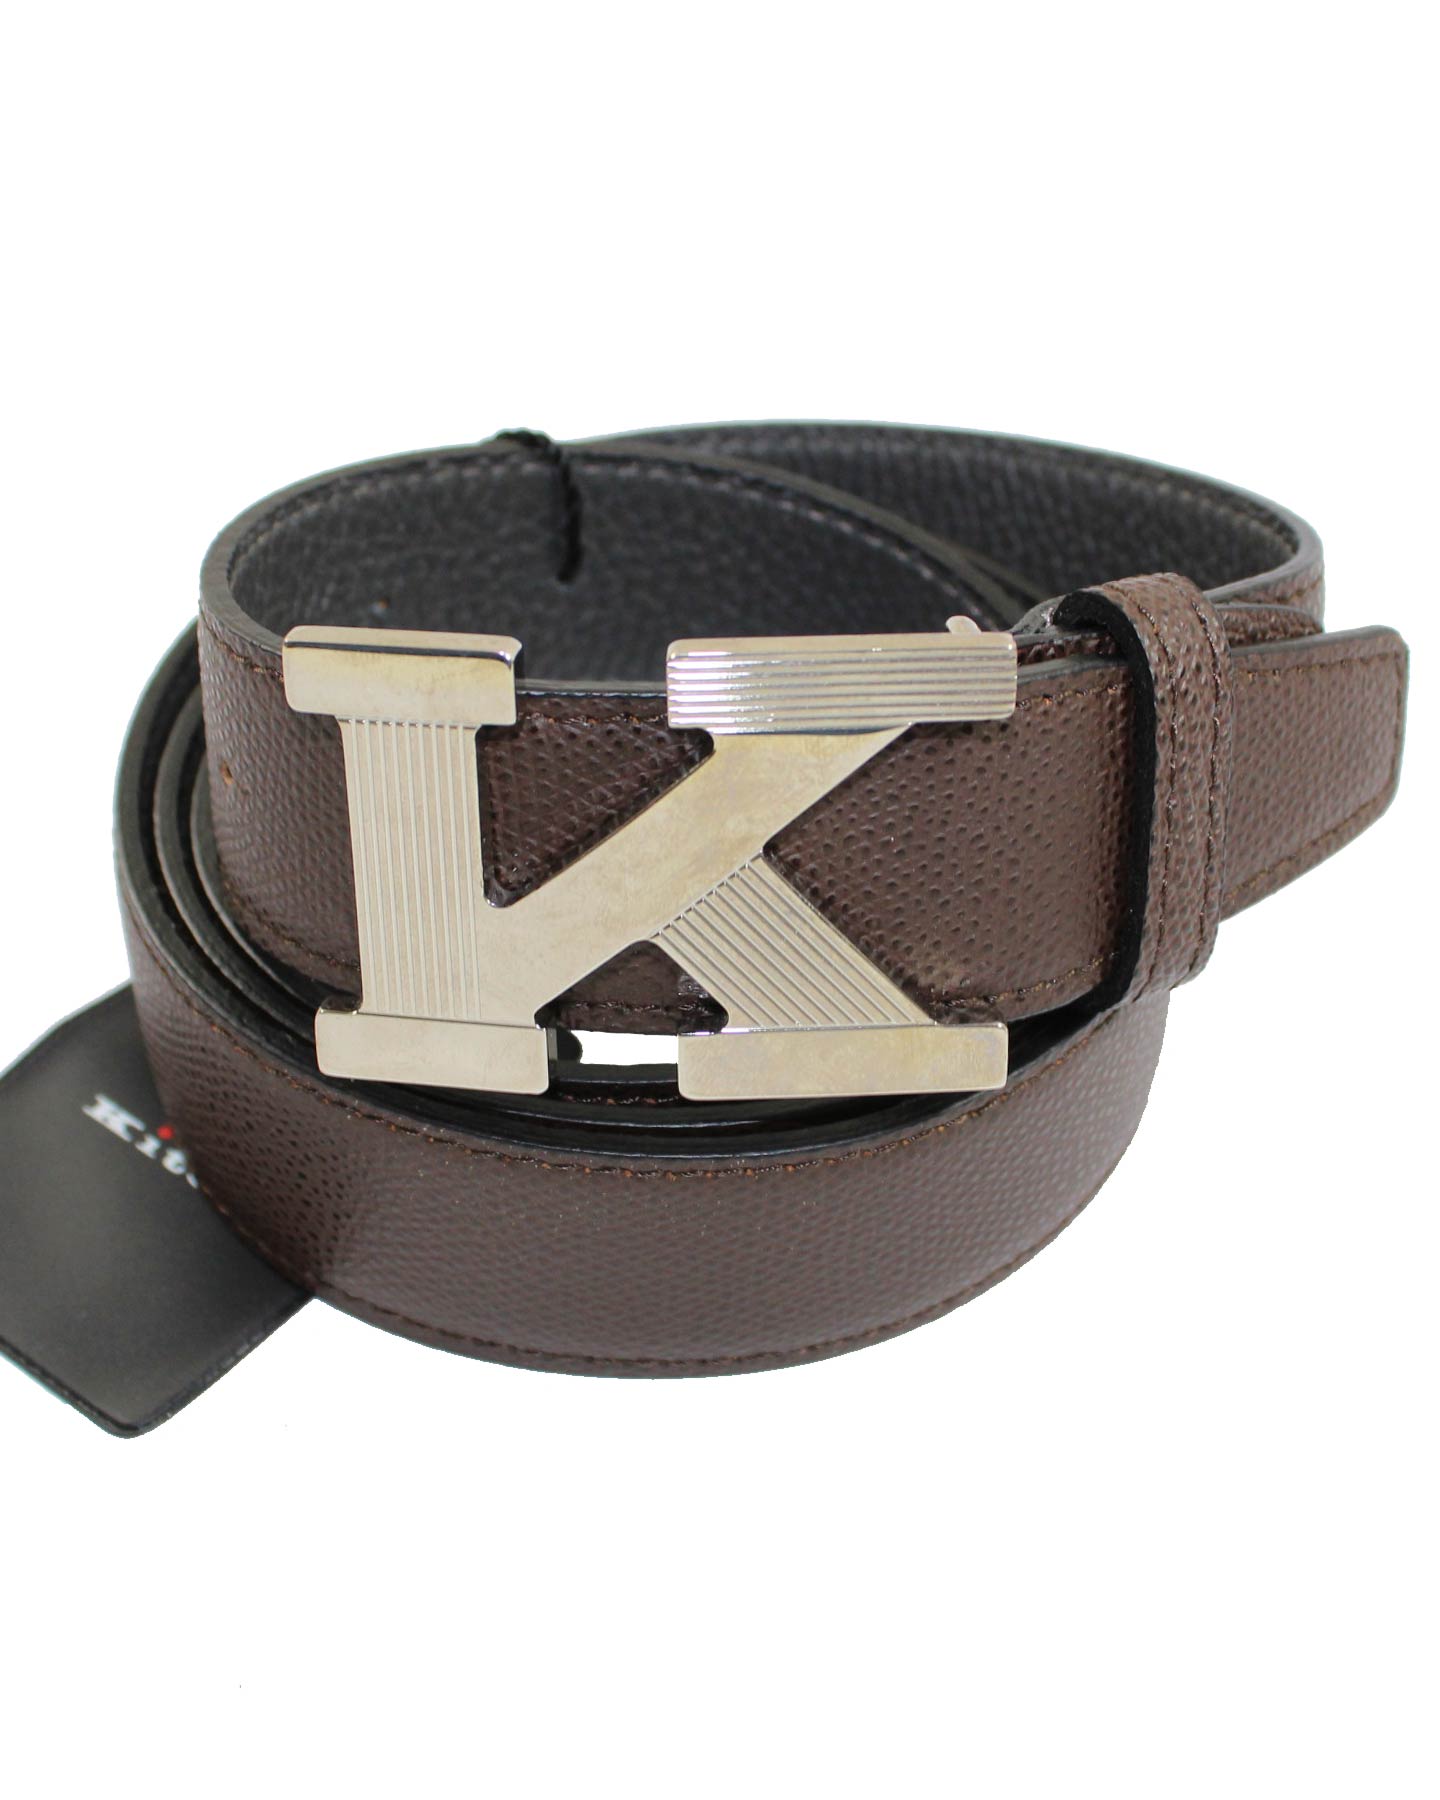 Kiton Belt Brown Grain K Buckle Leather Men Belt 120 / 48